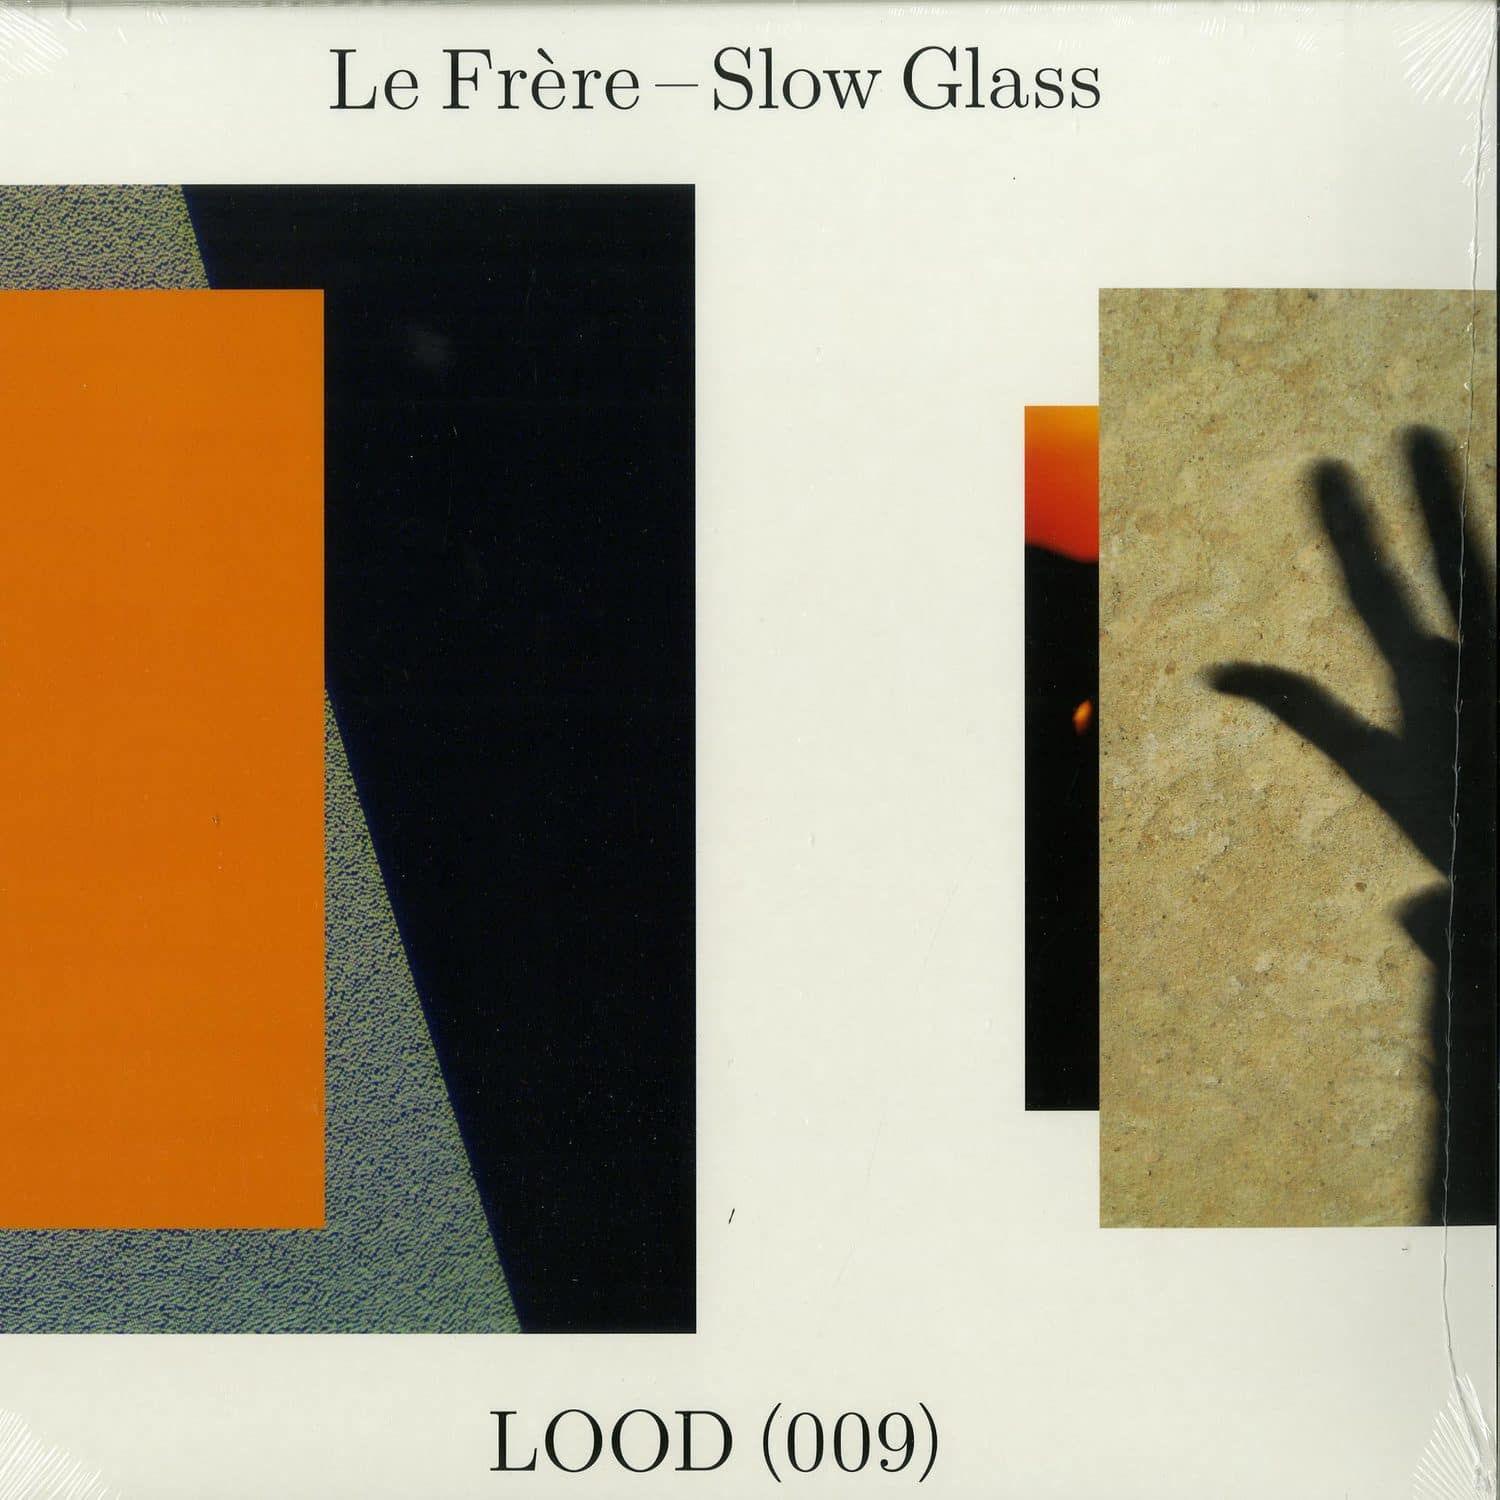 Le Frere - SLOW GLASS